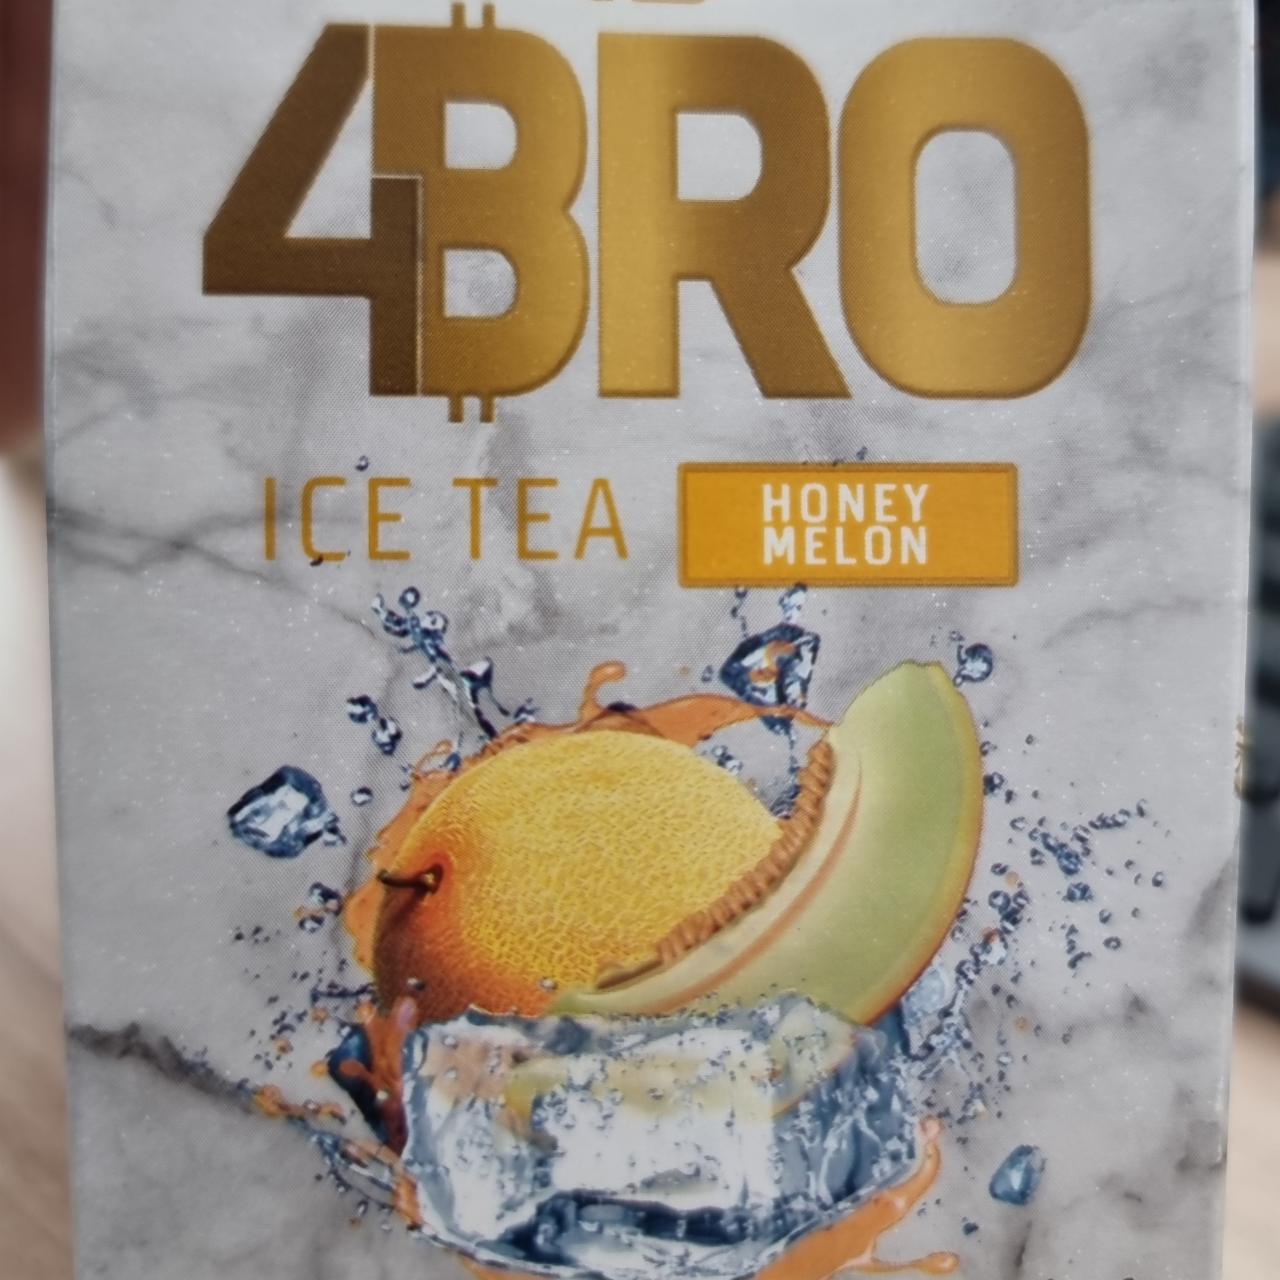 Fotografie - Ice tea Honey melon 4BRO